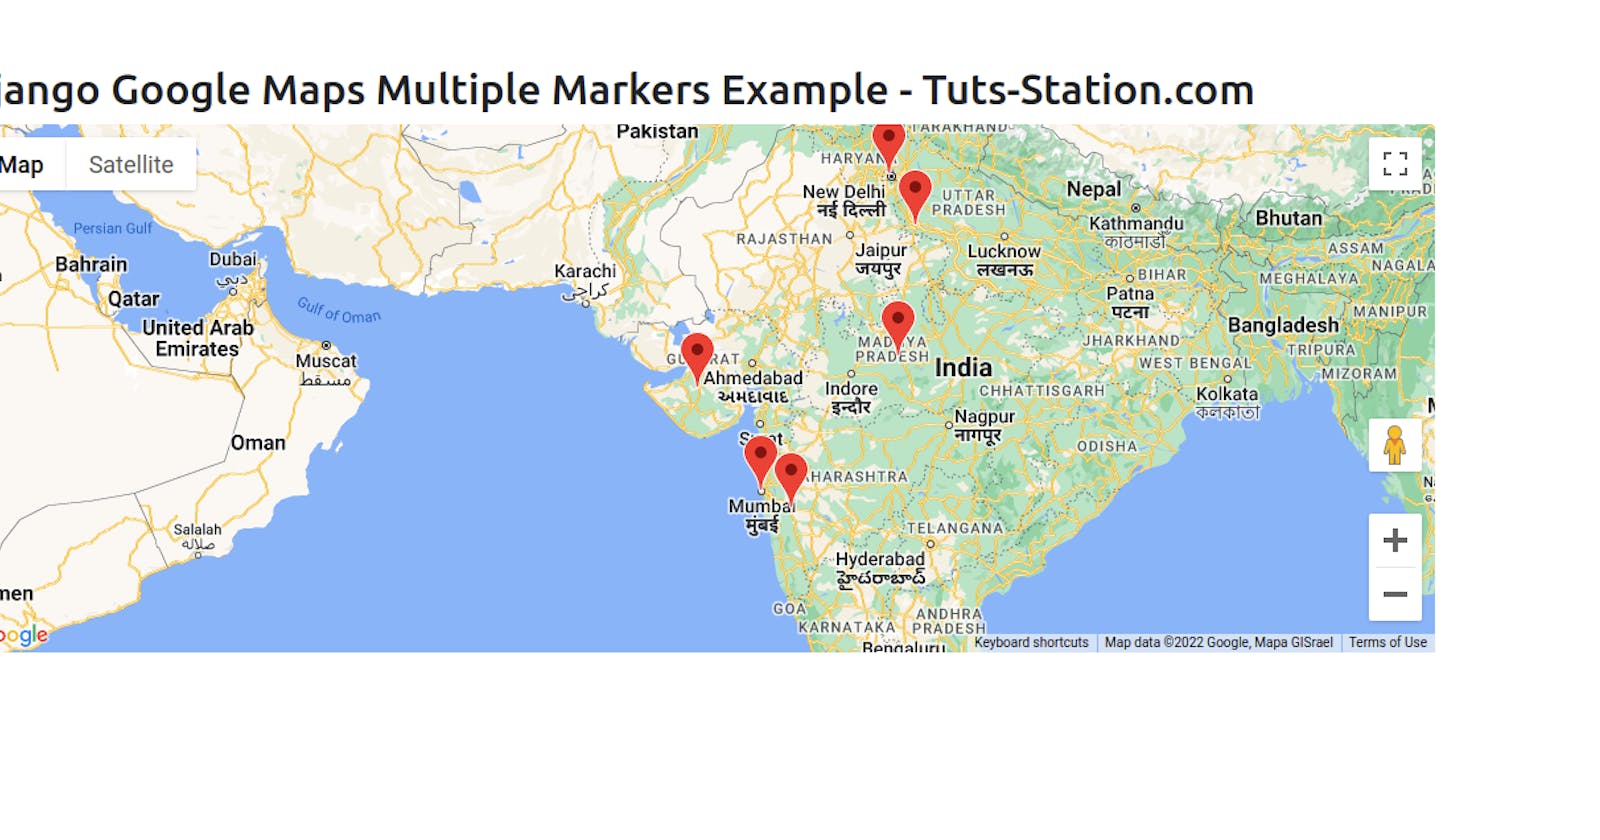 Django Google Maps Multiple Markers Example